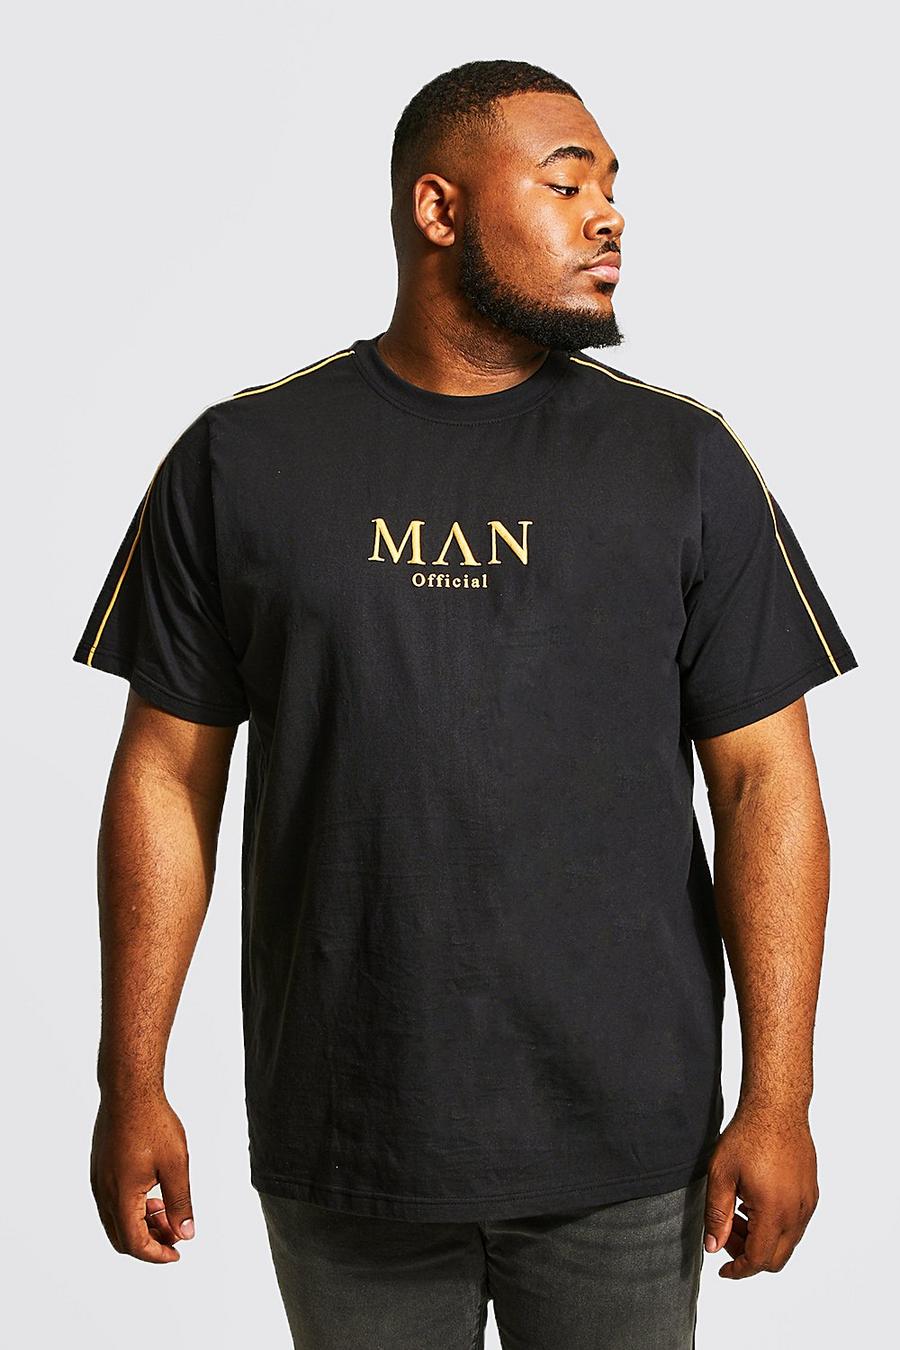 T-shirt Plus Size Man Gold con cordoncino, Black nero image number 1